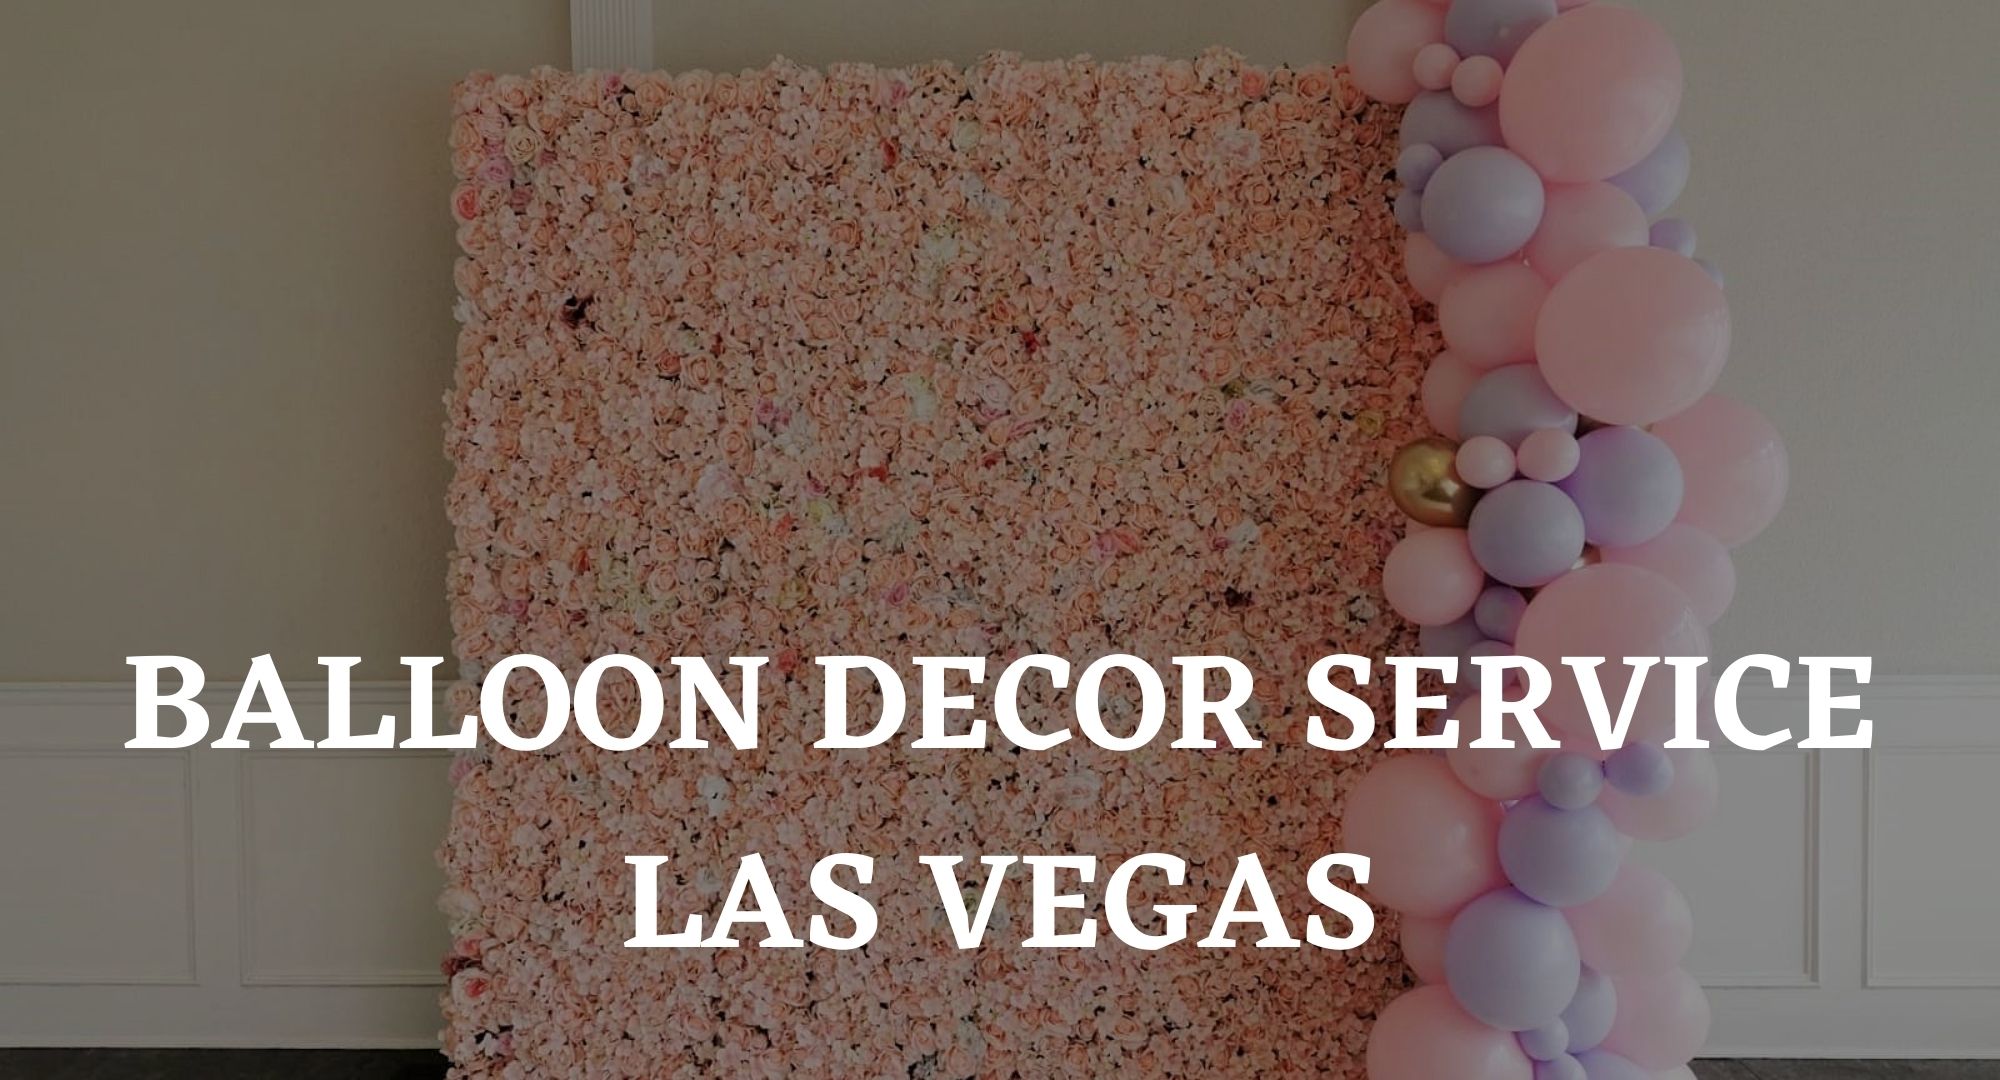 Balloon Decor LV LLC - Lighting & Decor - Las Vegas, NV - WeddingWire